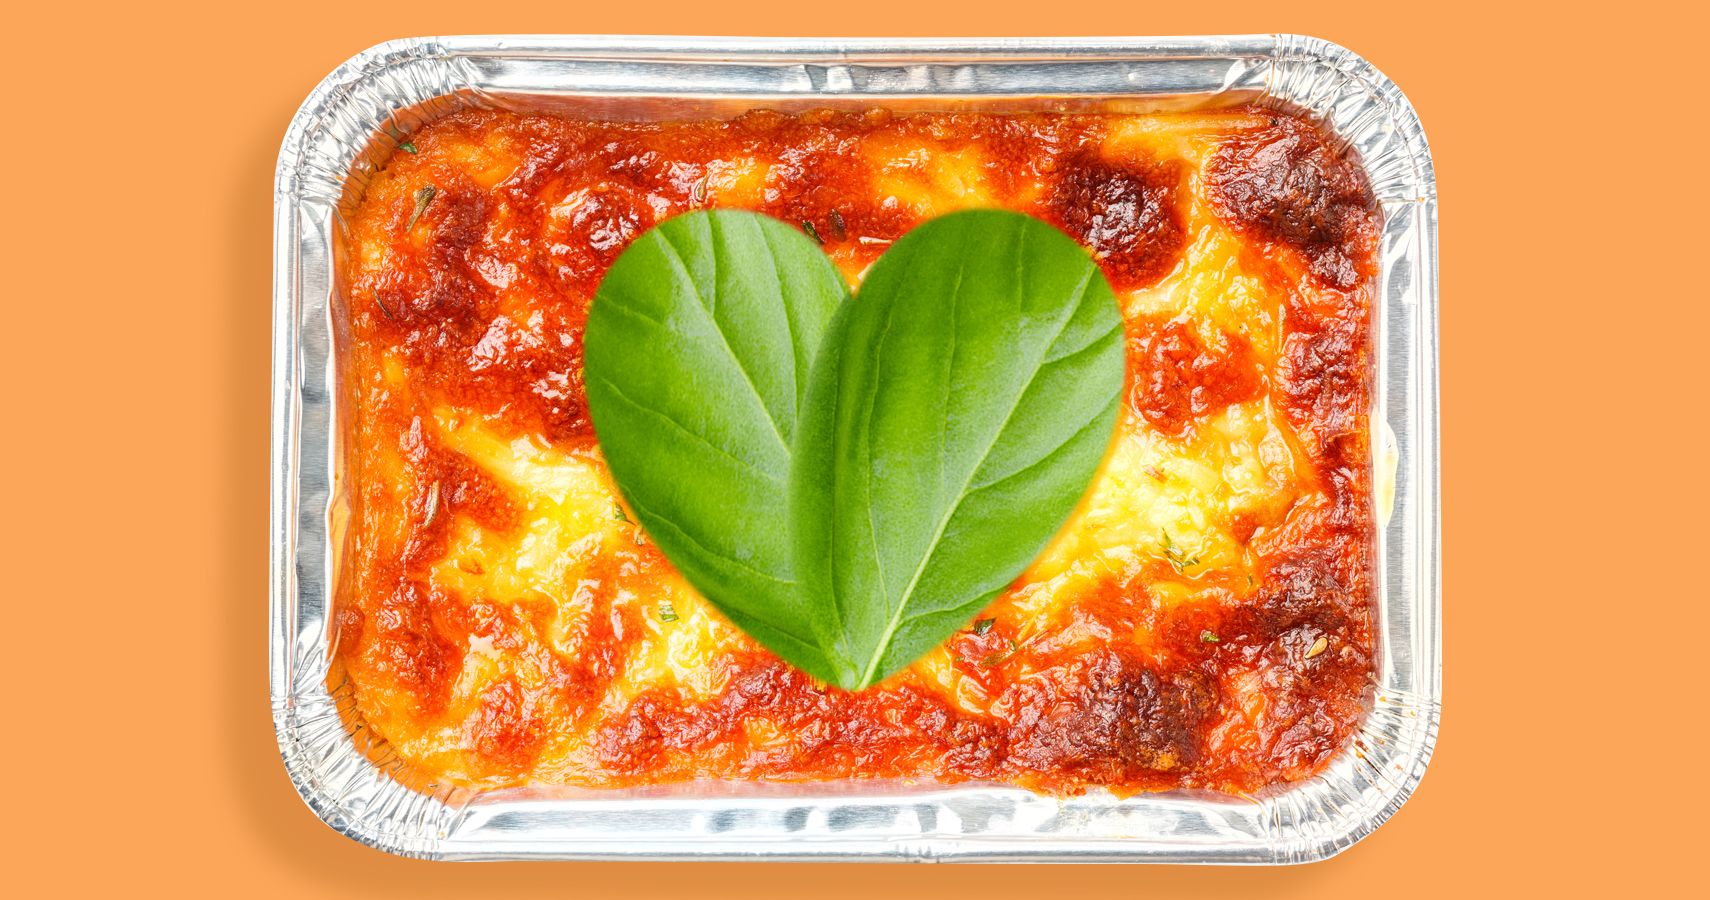 ‘Lasagna Mamas’ Are Bringing Love & Food To Those In Need